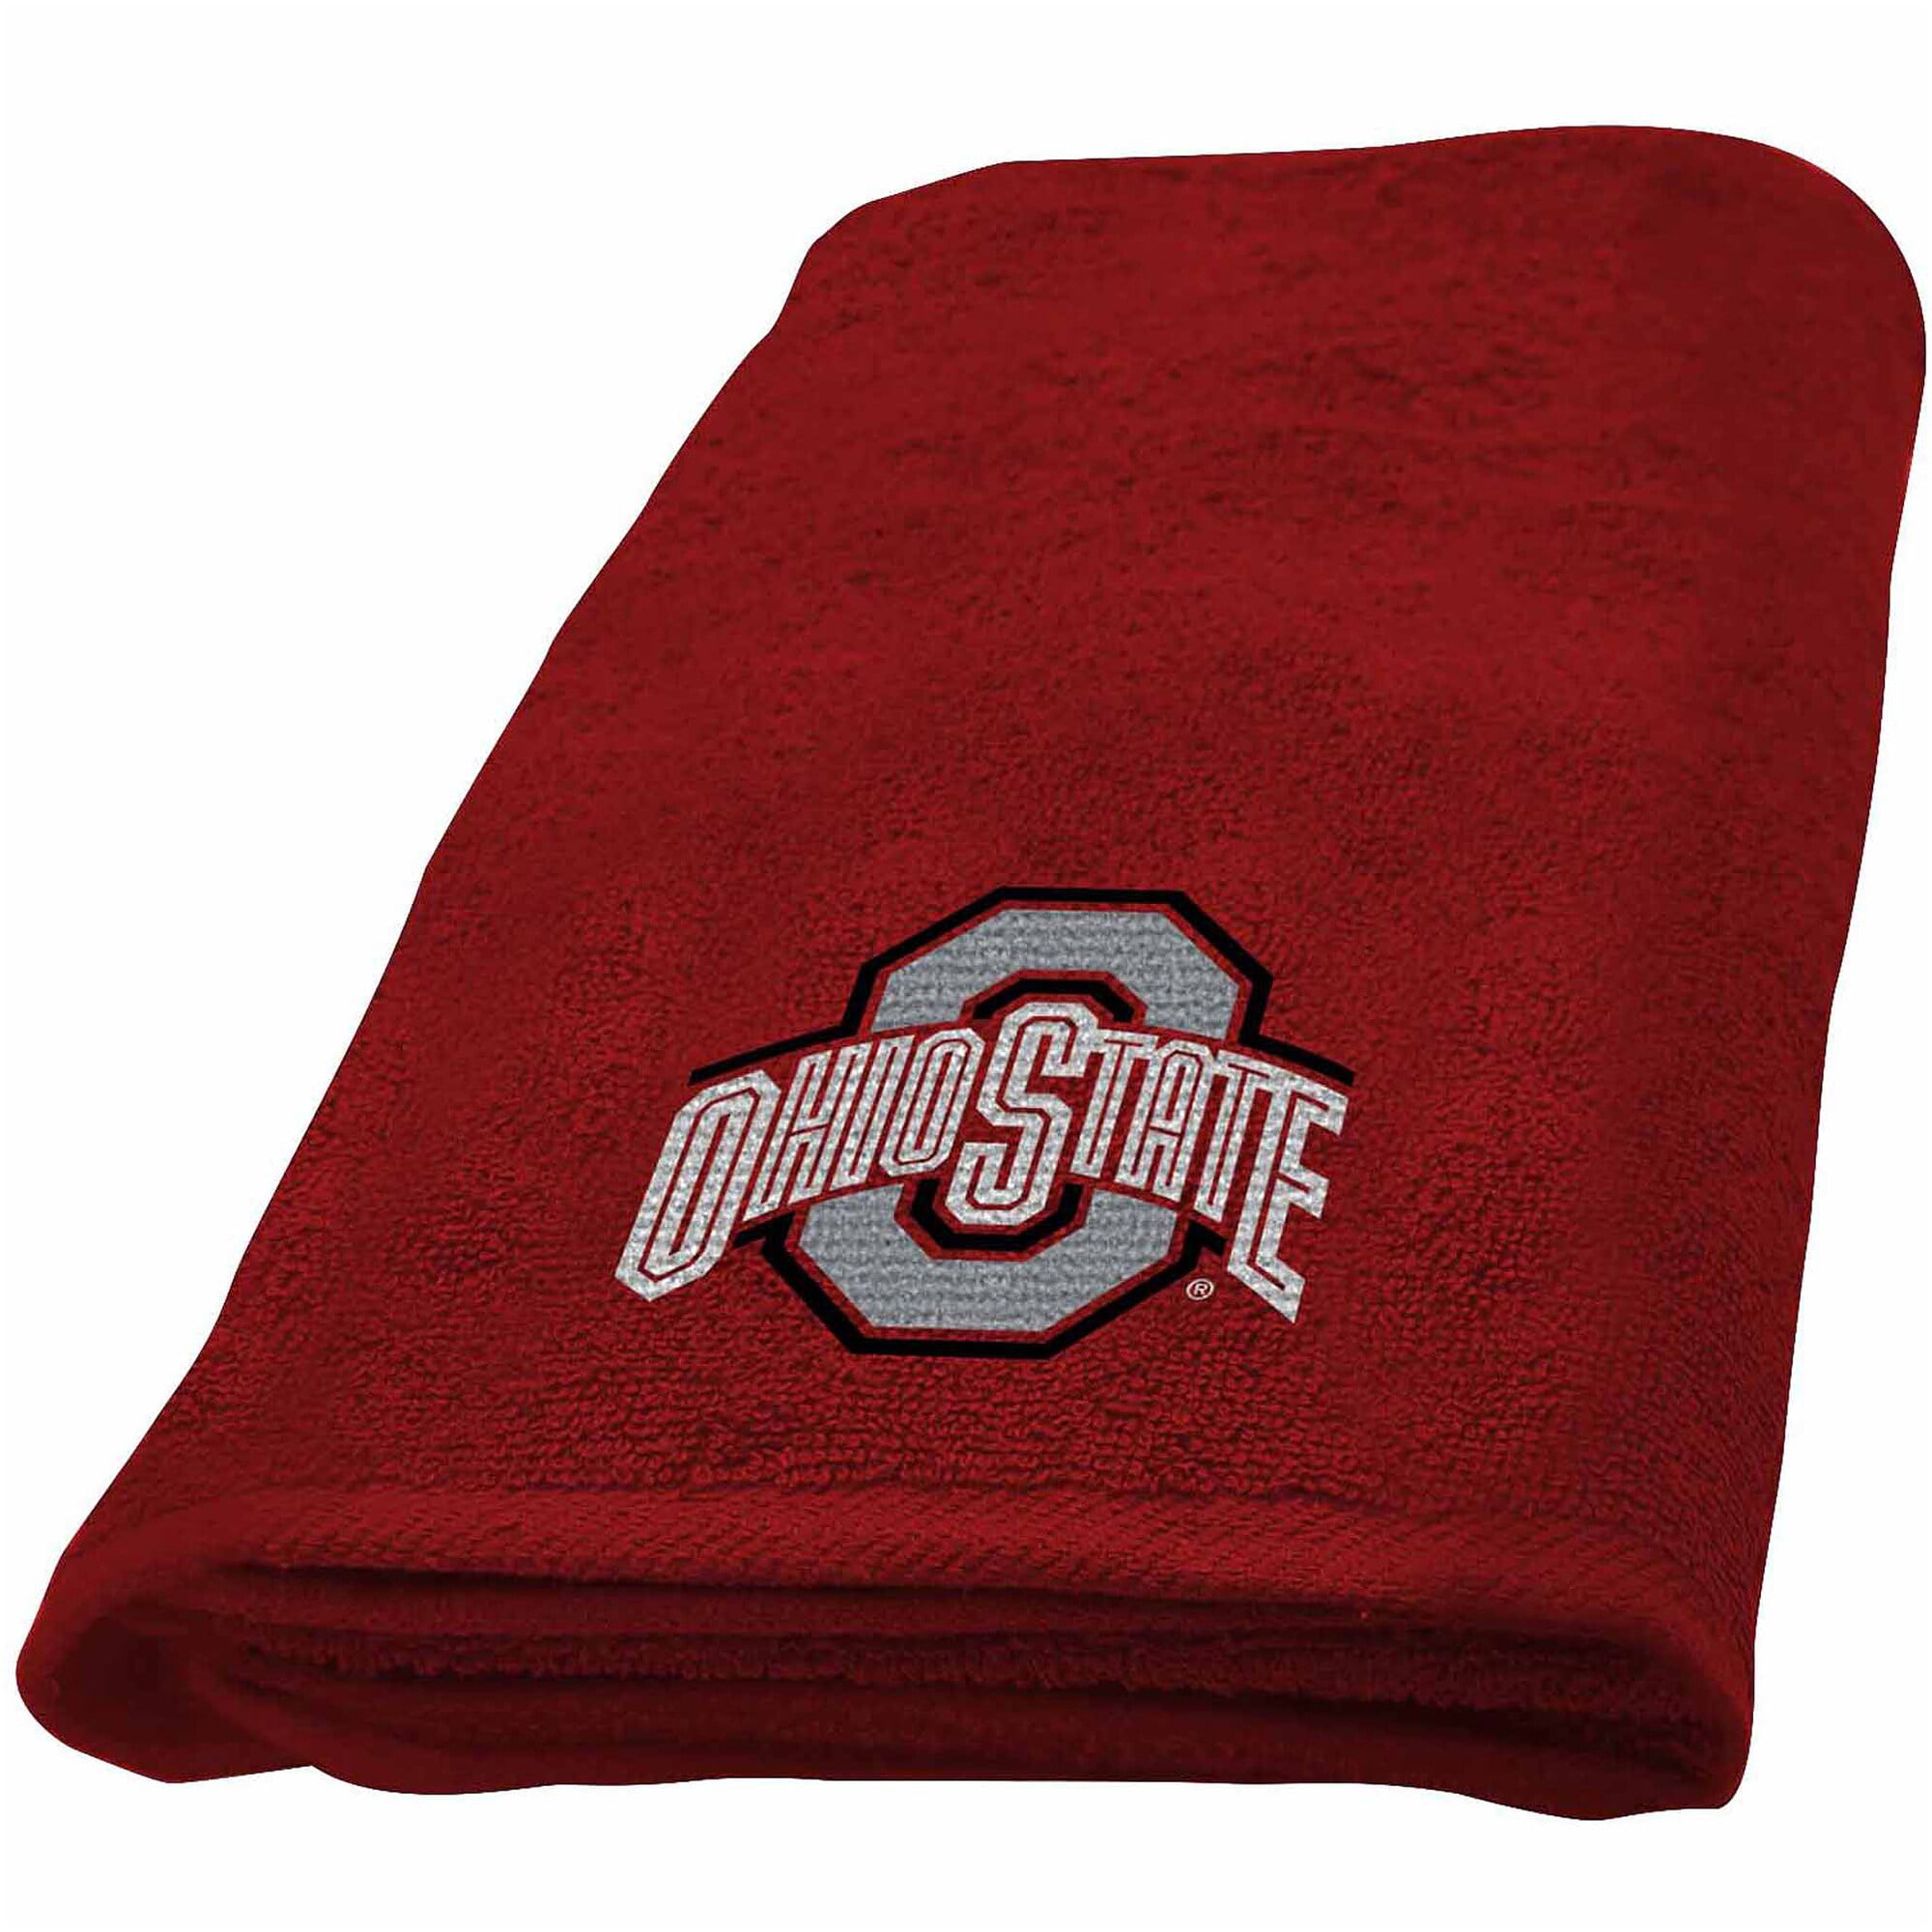 McArthur Ohio State Buckeyes Workout Exercise Towel 